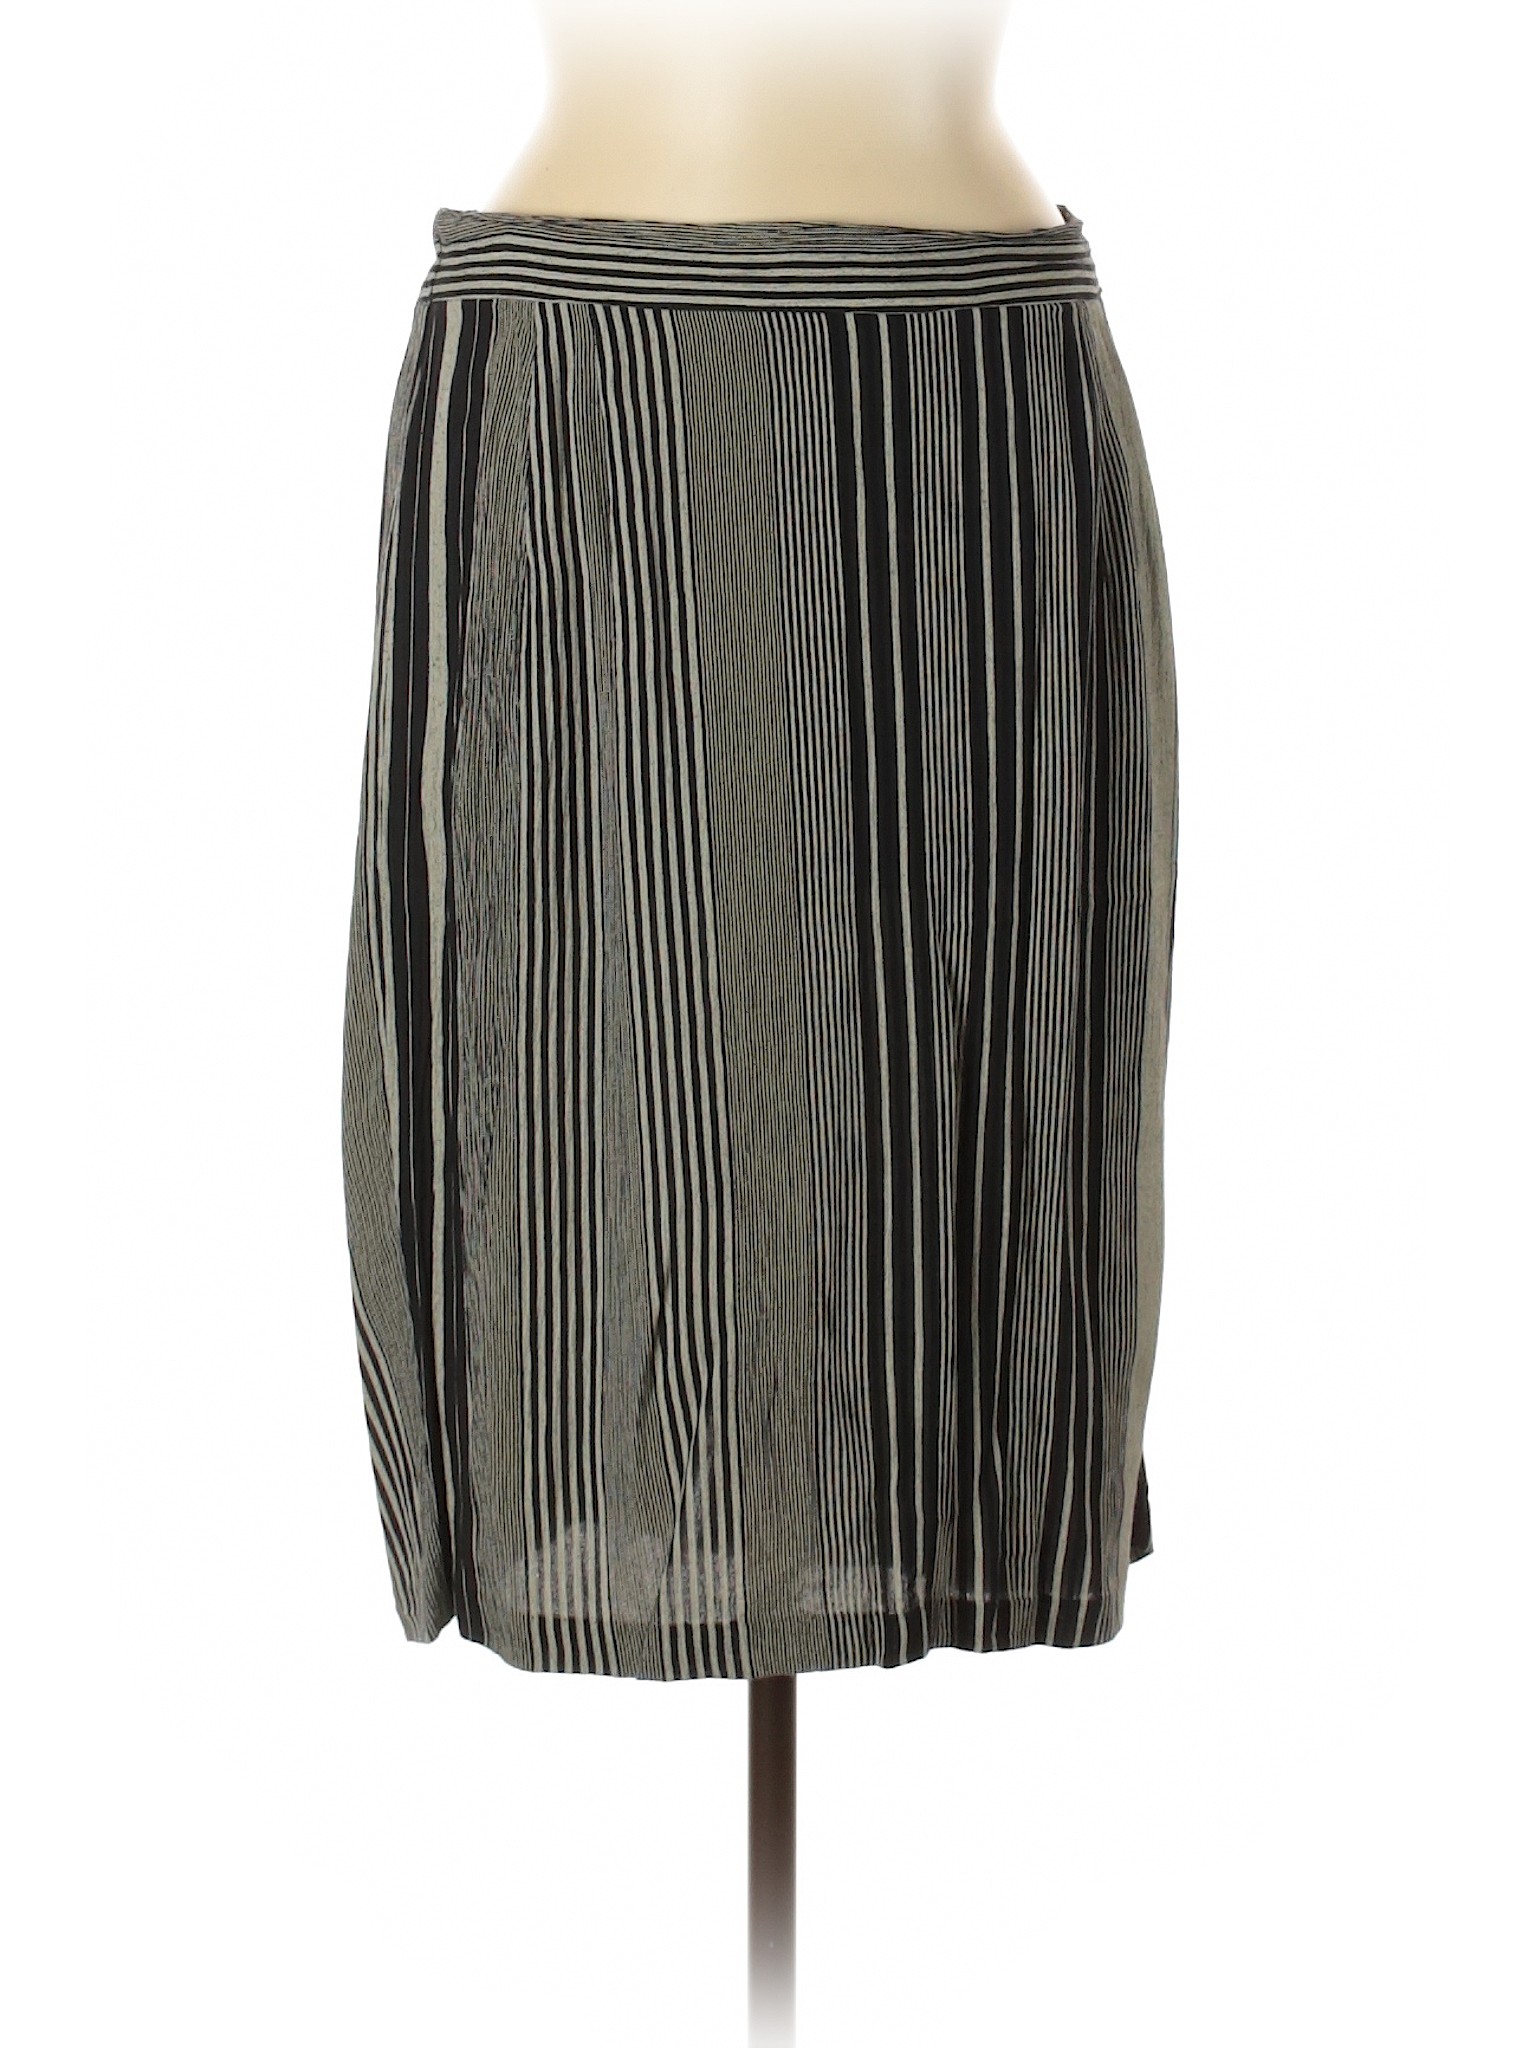 Intriguing Threads Women Black Casual Skirt 14 | eBay